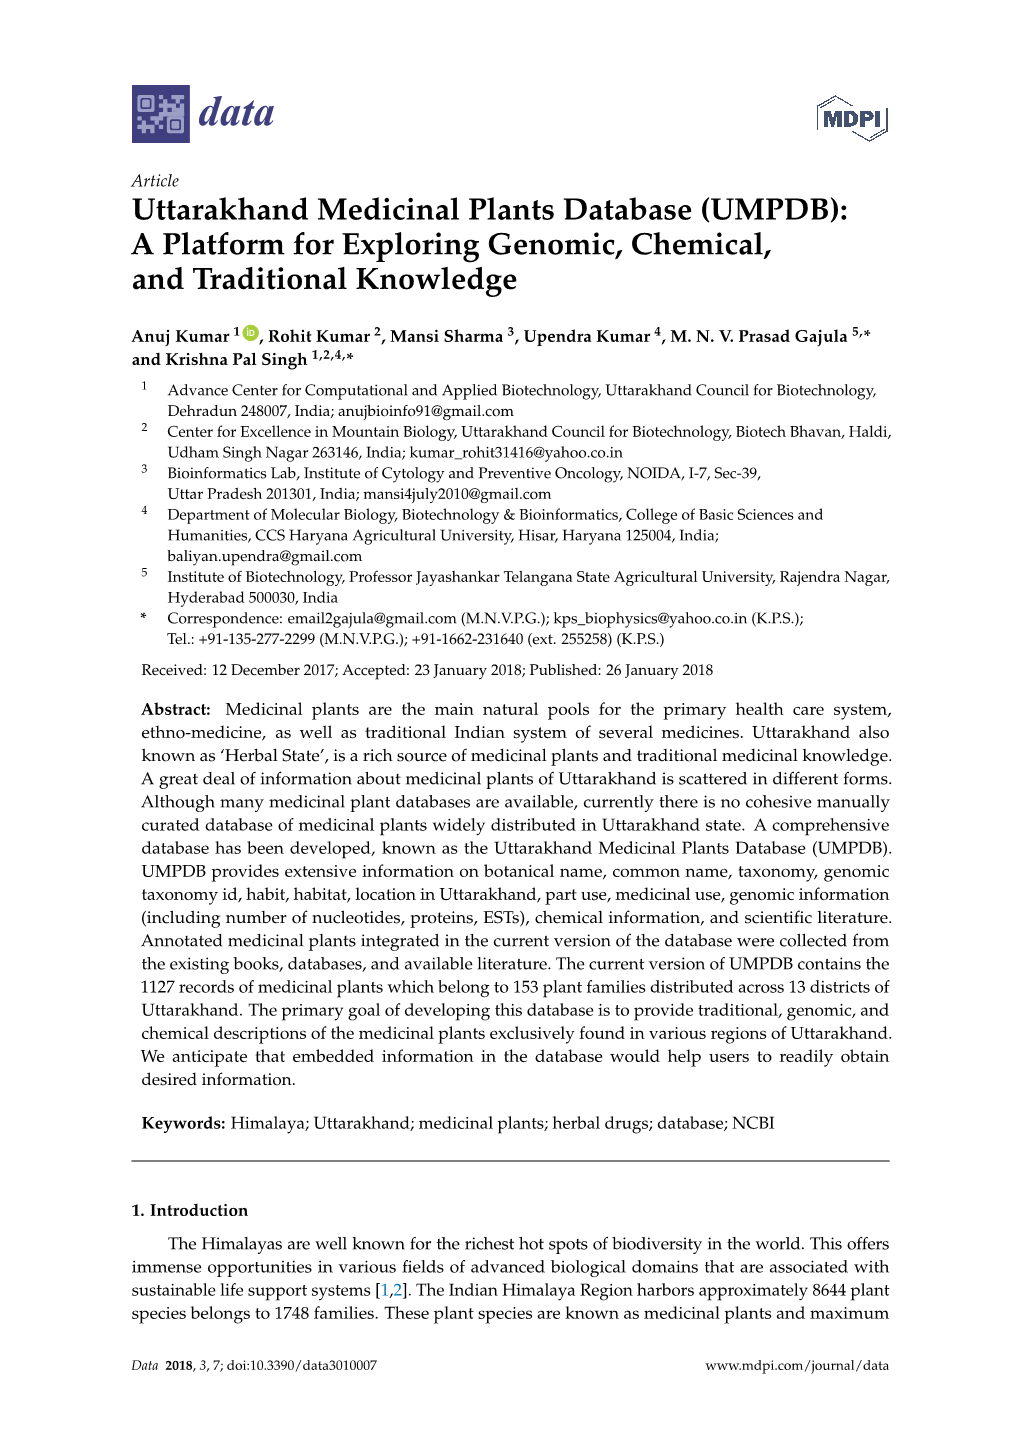 Uttarakhand Medicinal Plants Database (UMPDB): a Platform for Exploring Genomic, Chemical, and Traditional Knowledge